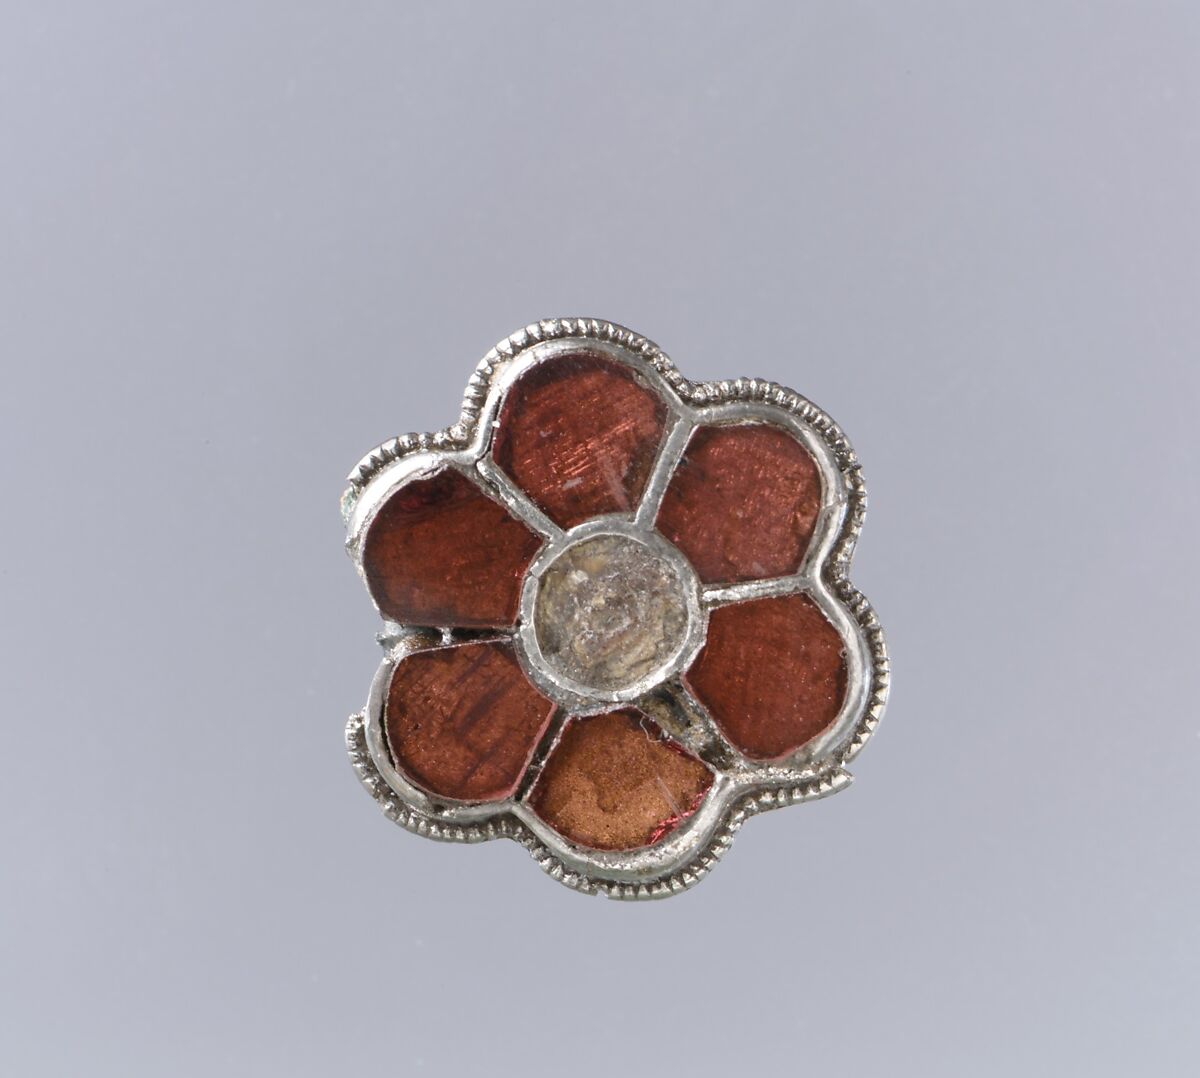 Rosette Brooch, Silver-gilt, beaded filigree edging, garnets with patterned foil ..., Frankish 